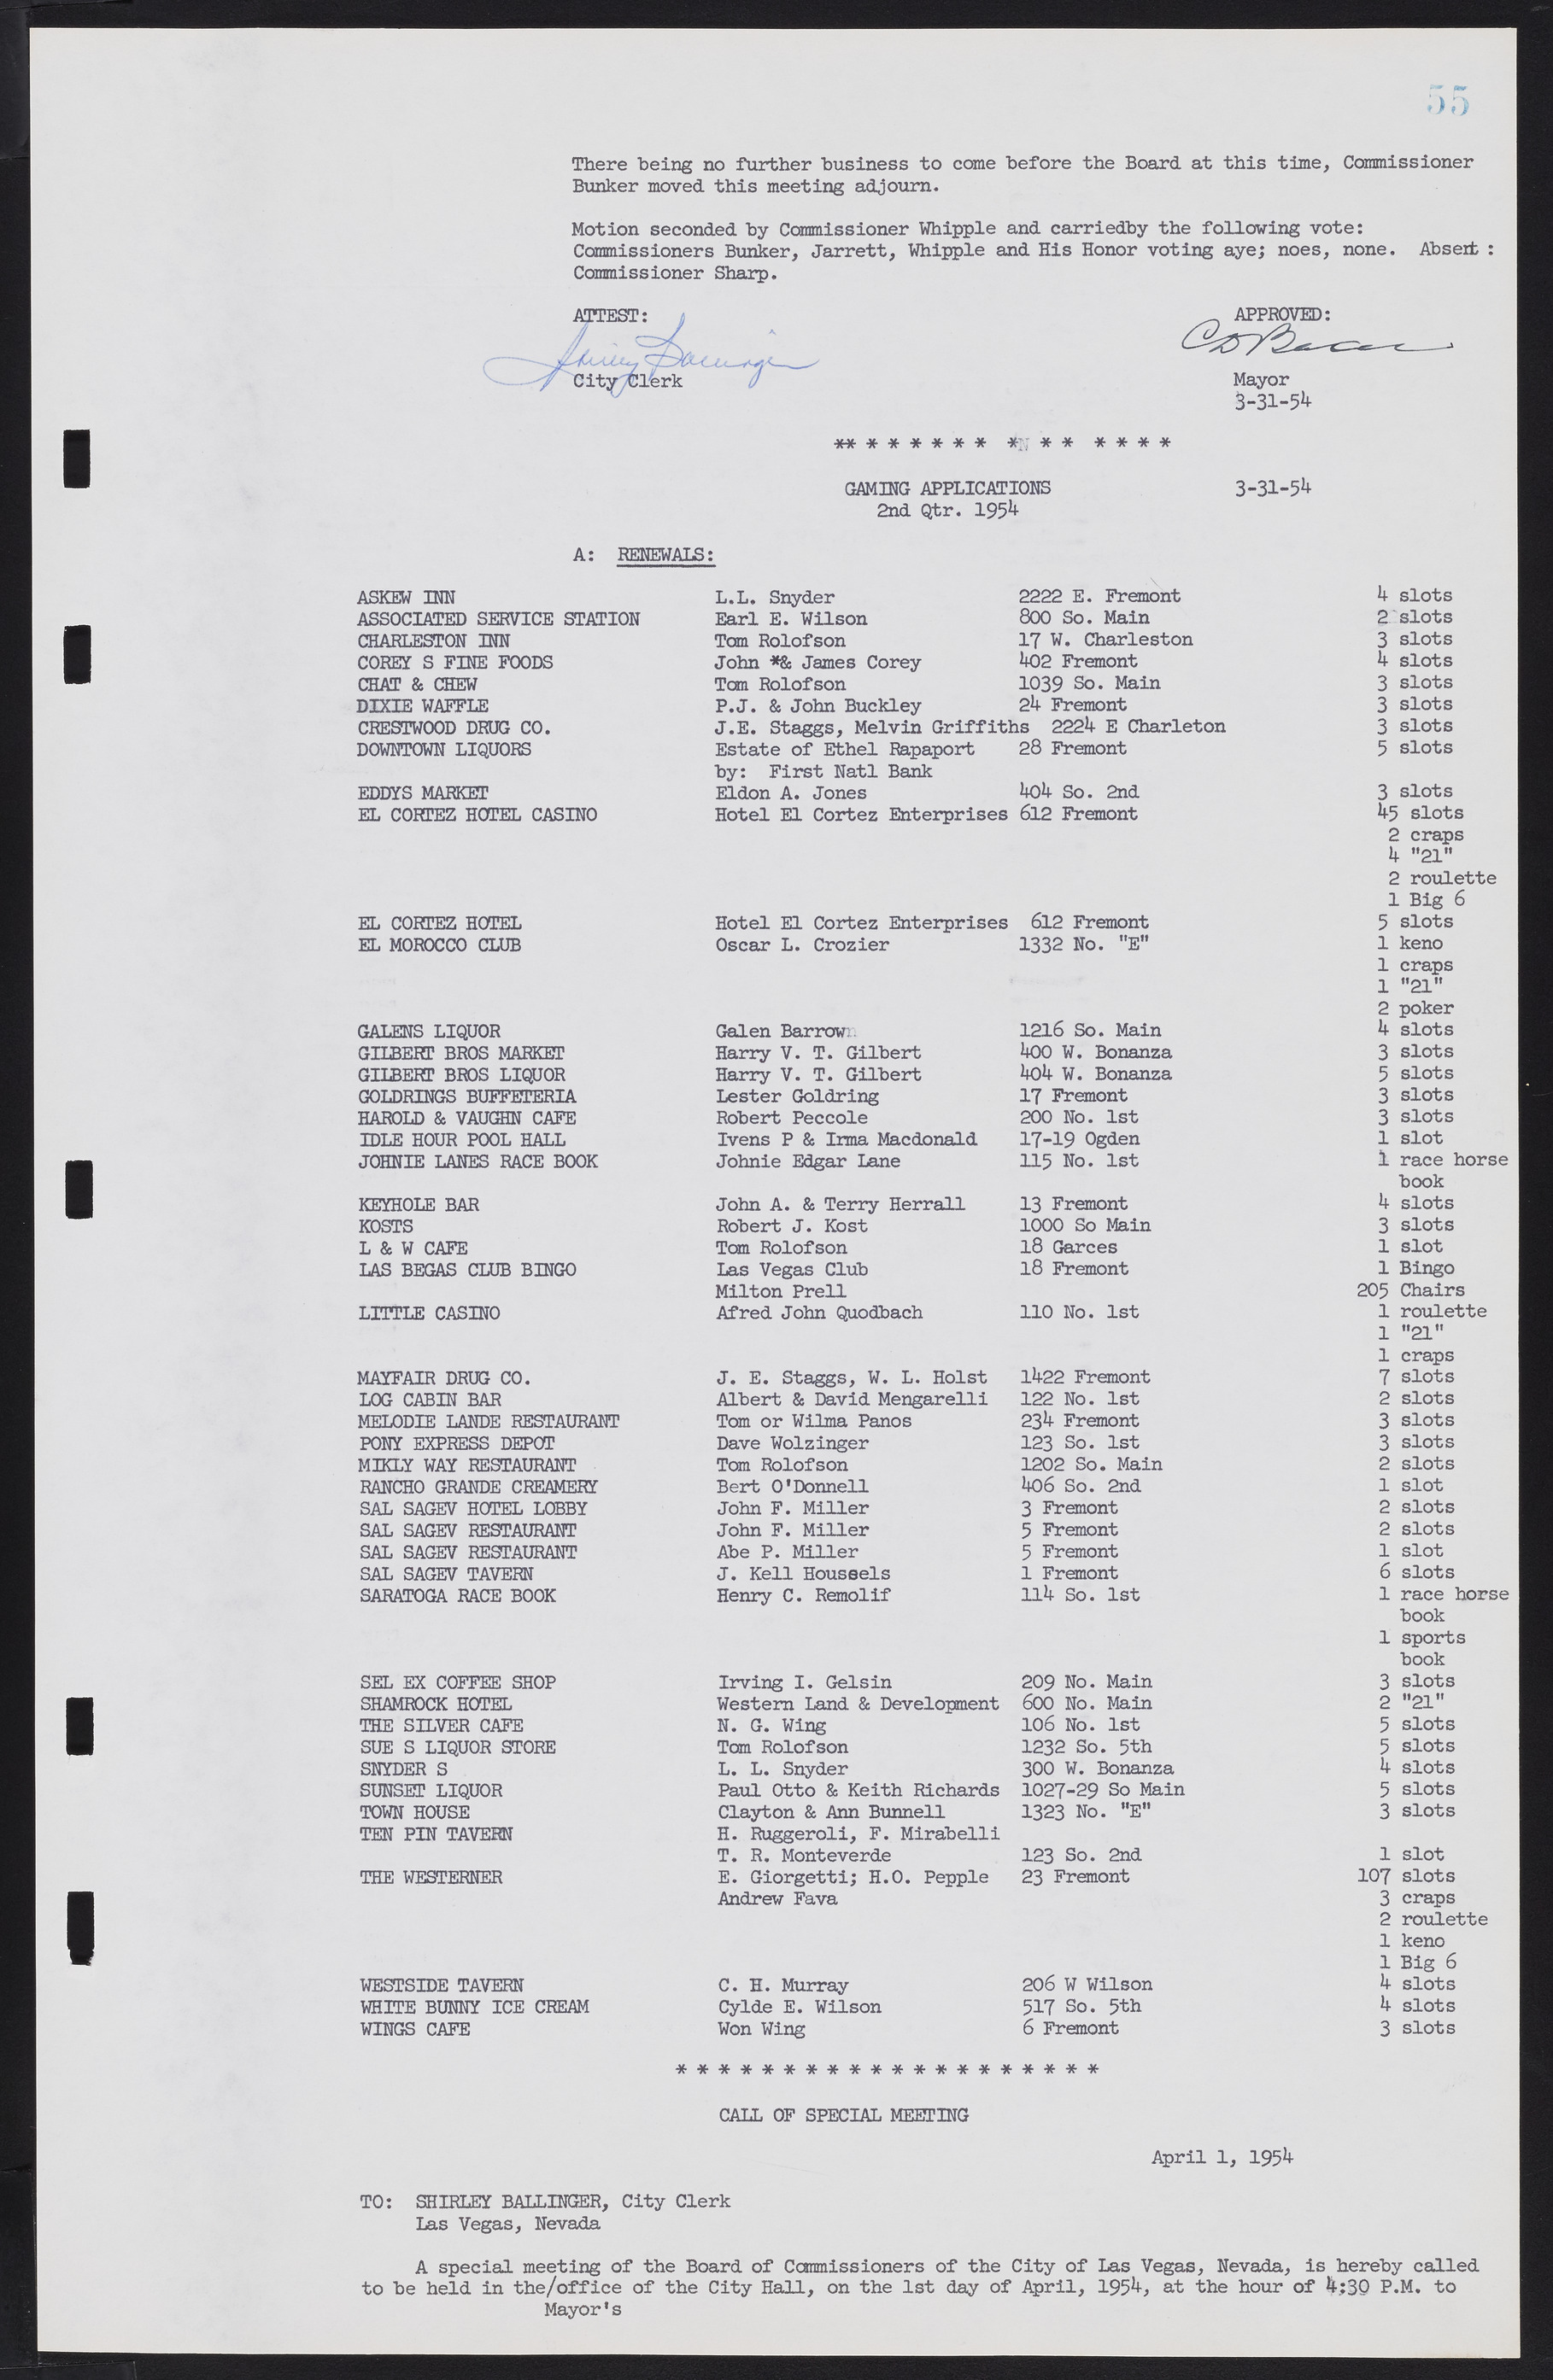 Las Vegas City Commission Minutes, February 17, 1954 to September 21, 1955, lvc000009-59